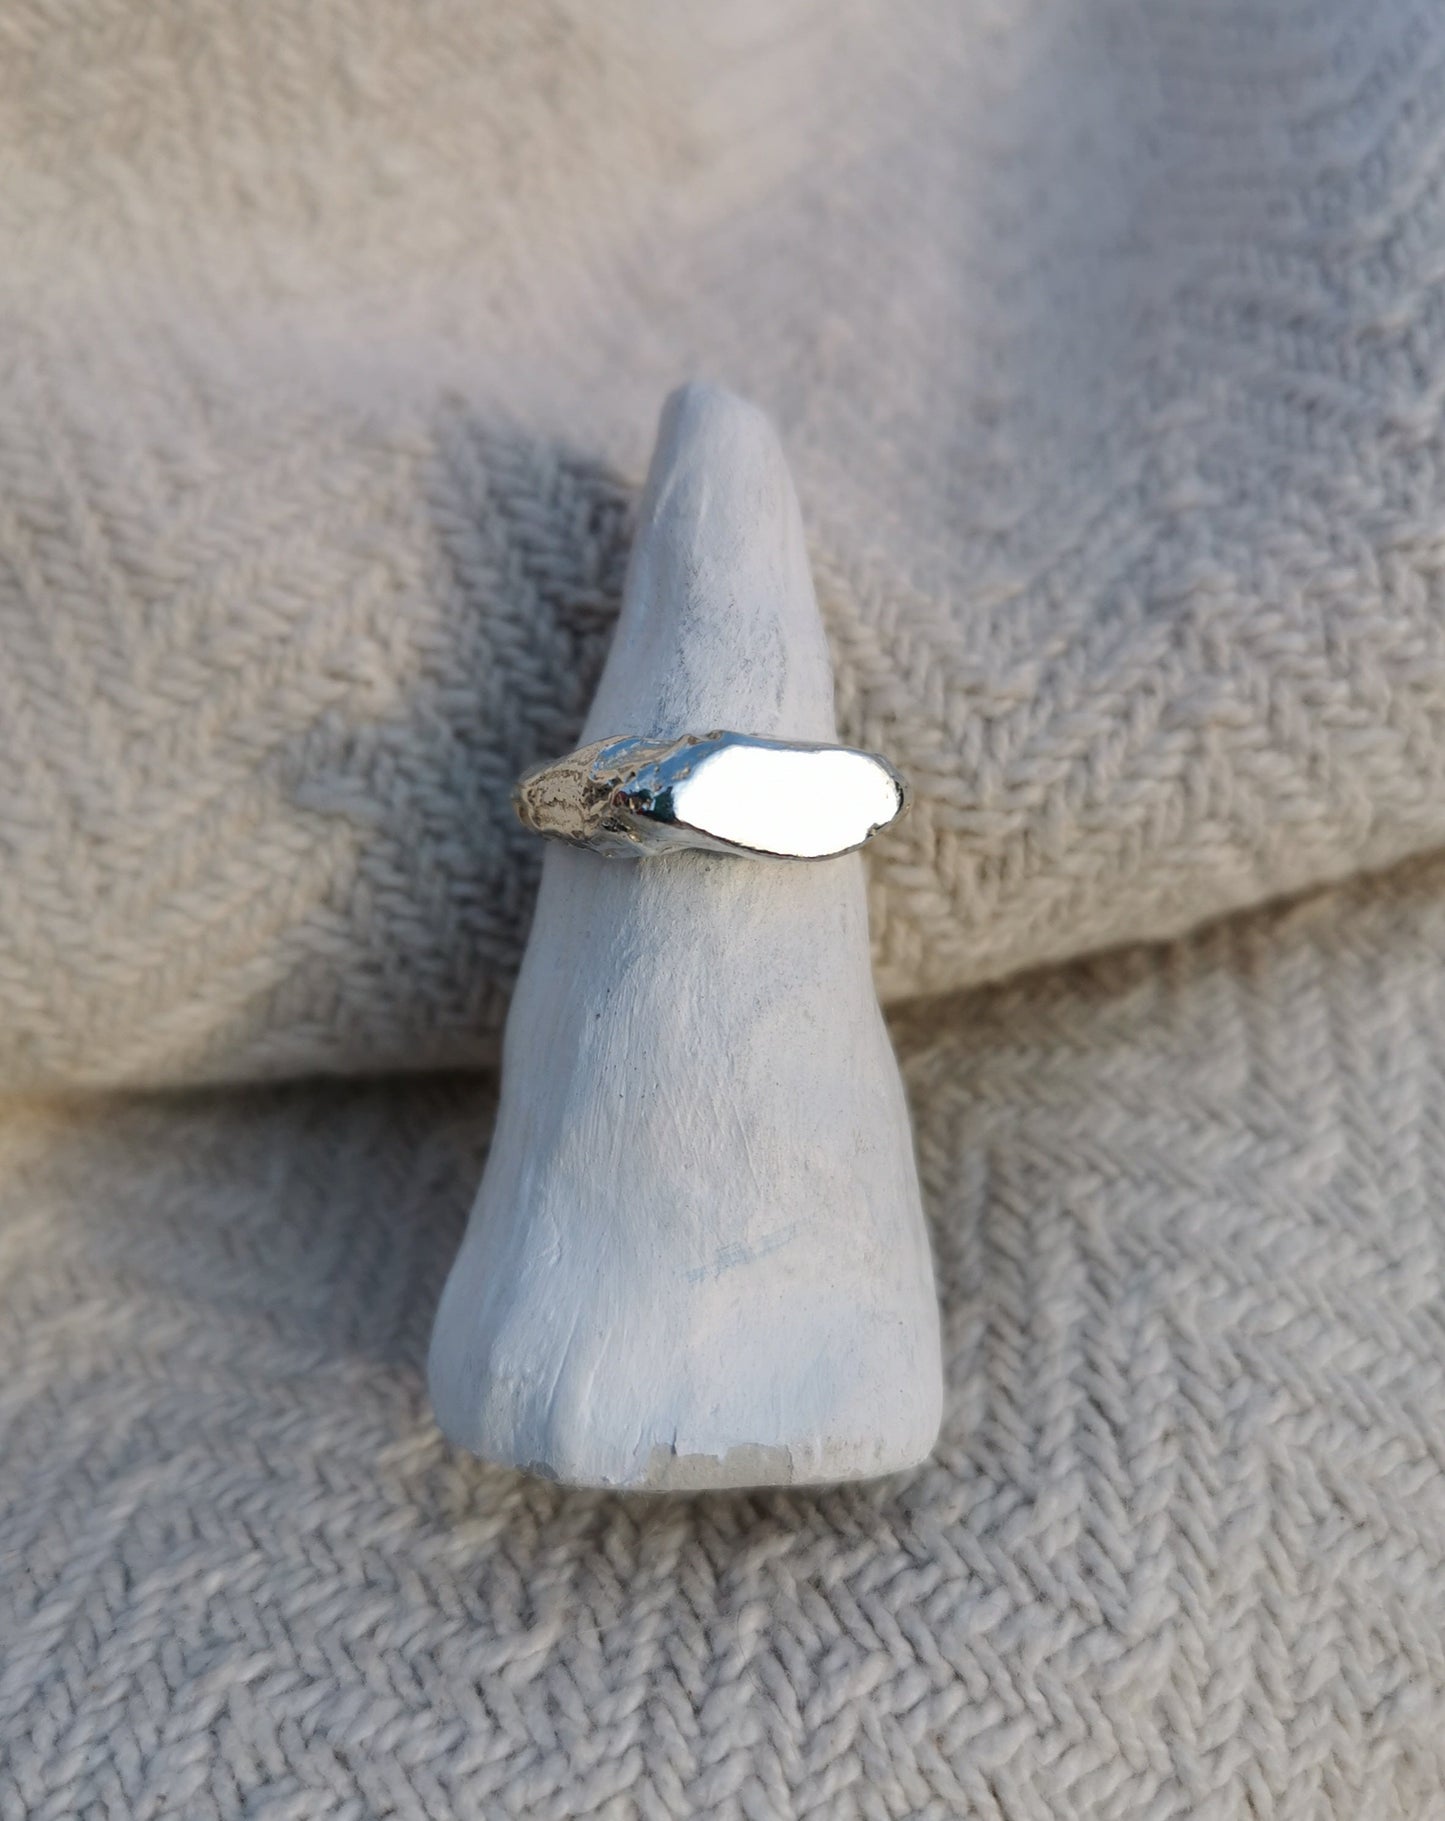 Blank Faced Organic Formed Ring